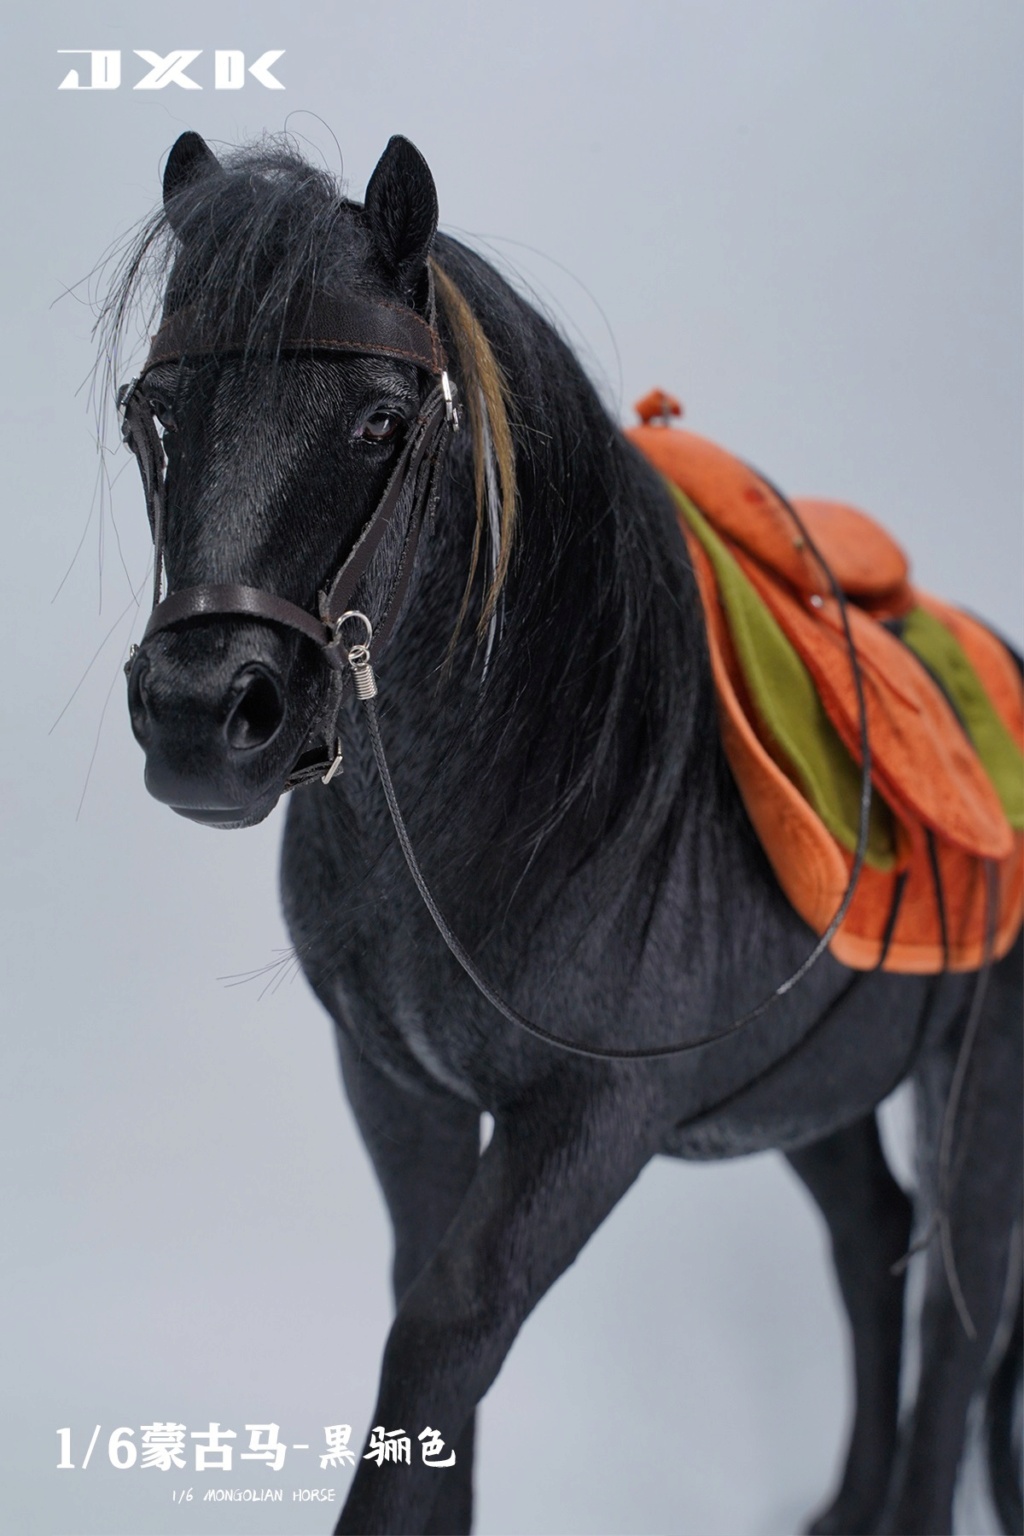 Accessory - NEW PRODUCT: JXK Studio: Mongolian Horse (JXK165) (PIC HEAVY) 14464310